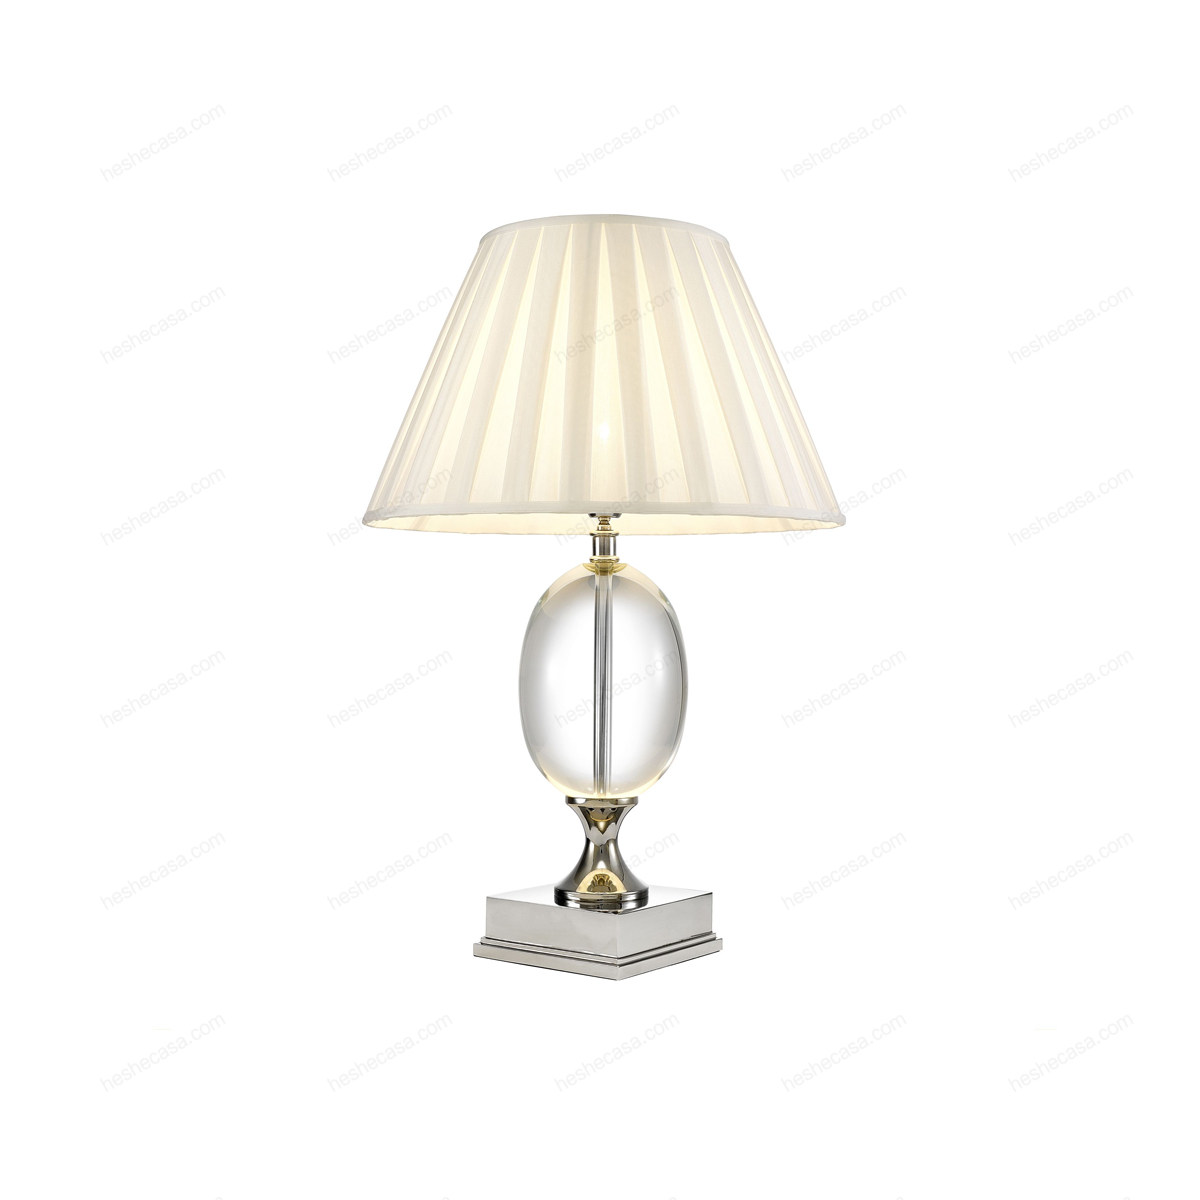 Table Lamp Galvin台灯